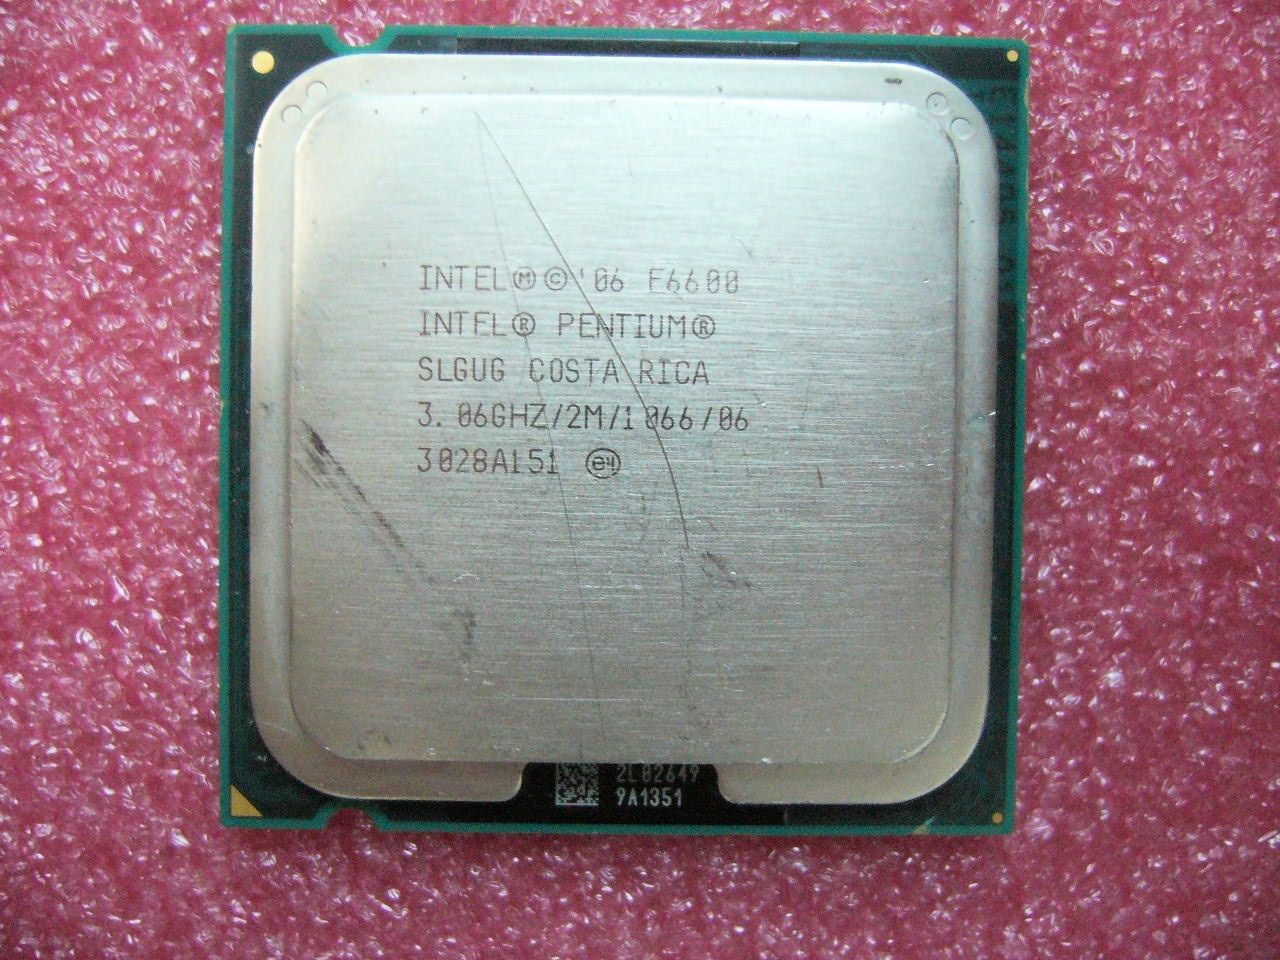 INTEL Pentium Dual Core E6600 CPU 3.06GHz 2MB/1066Mhz LGA775 SLGUG